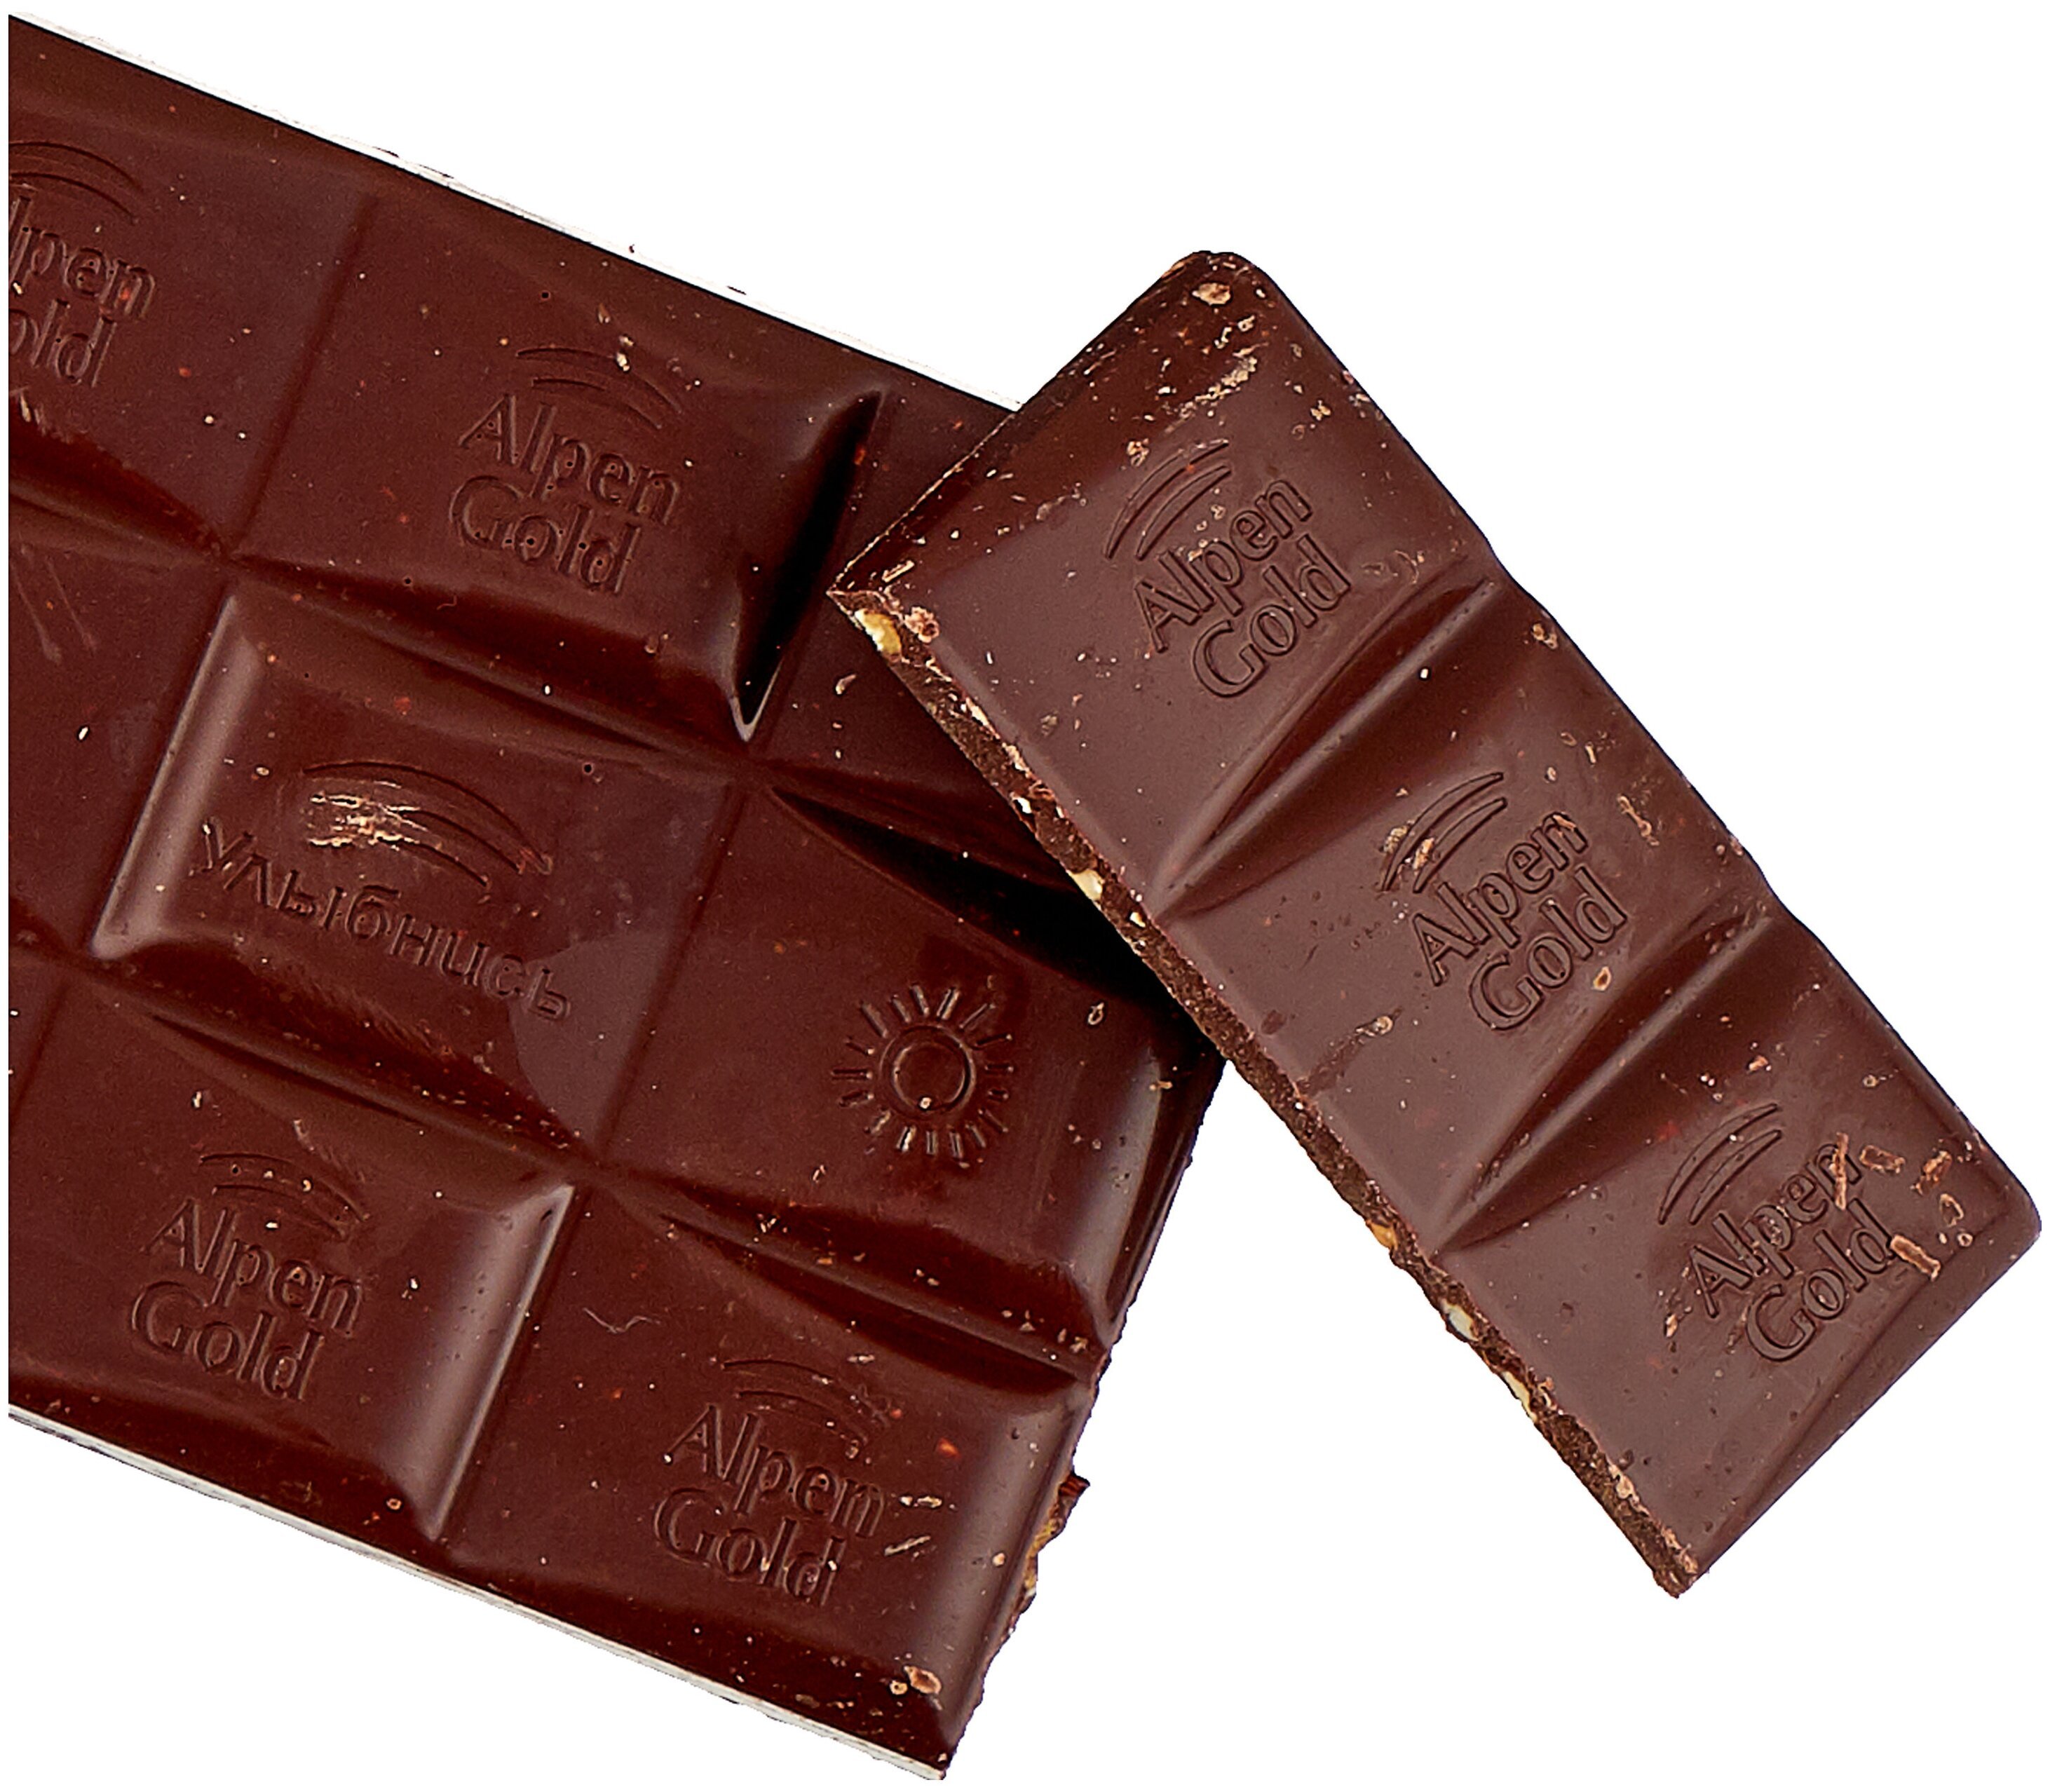 Шоколад варианты. Шоколад Альпен Гольд. Alpen Gold шоколад. Шоколад Альпен Гольд с фундуком. Шоколад Альпен Гольд темный с фундуком.